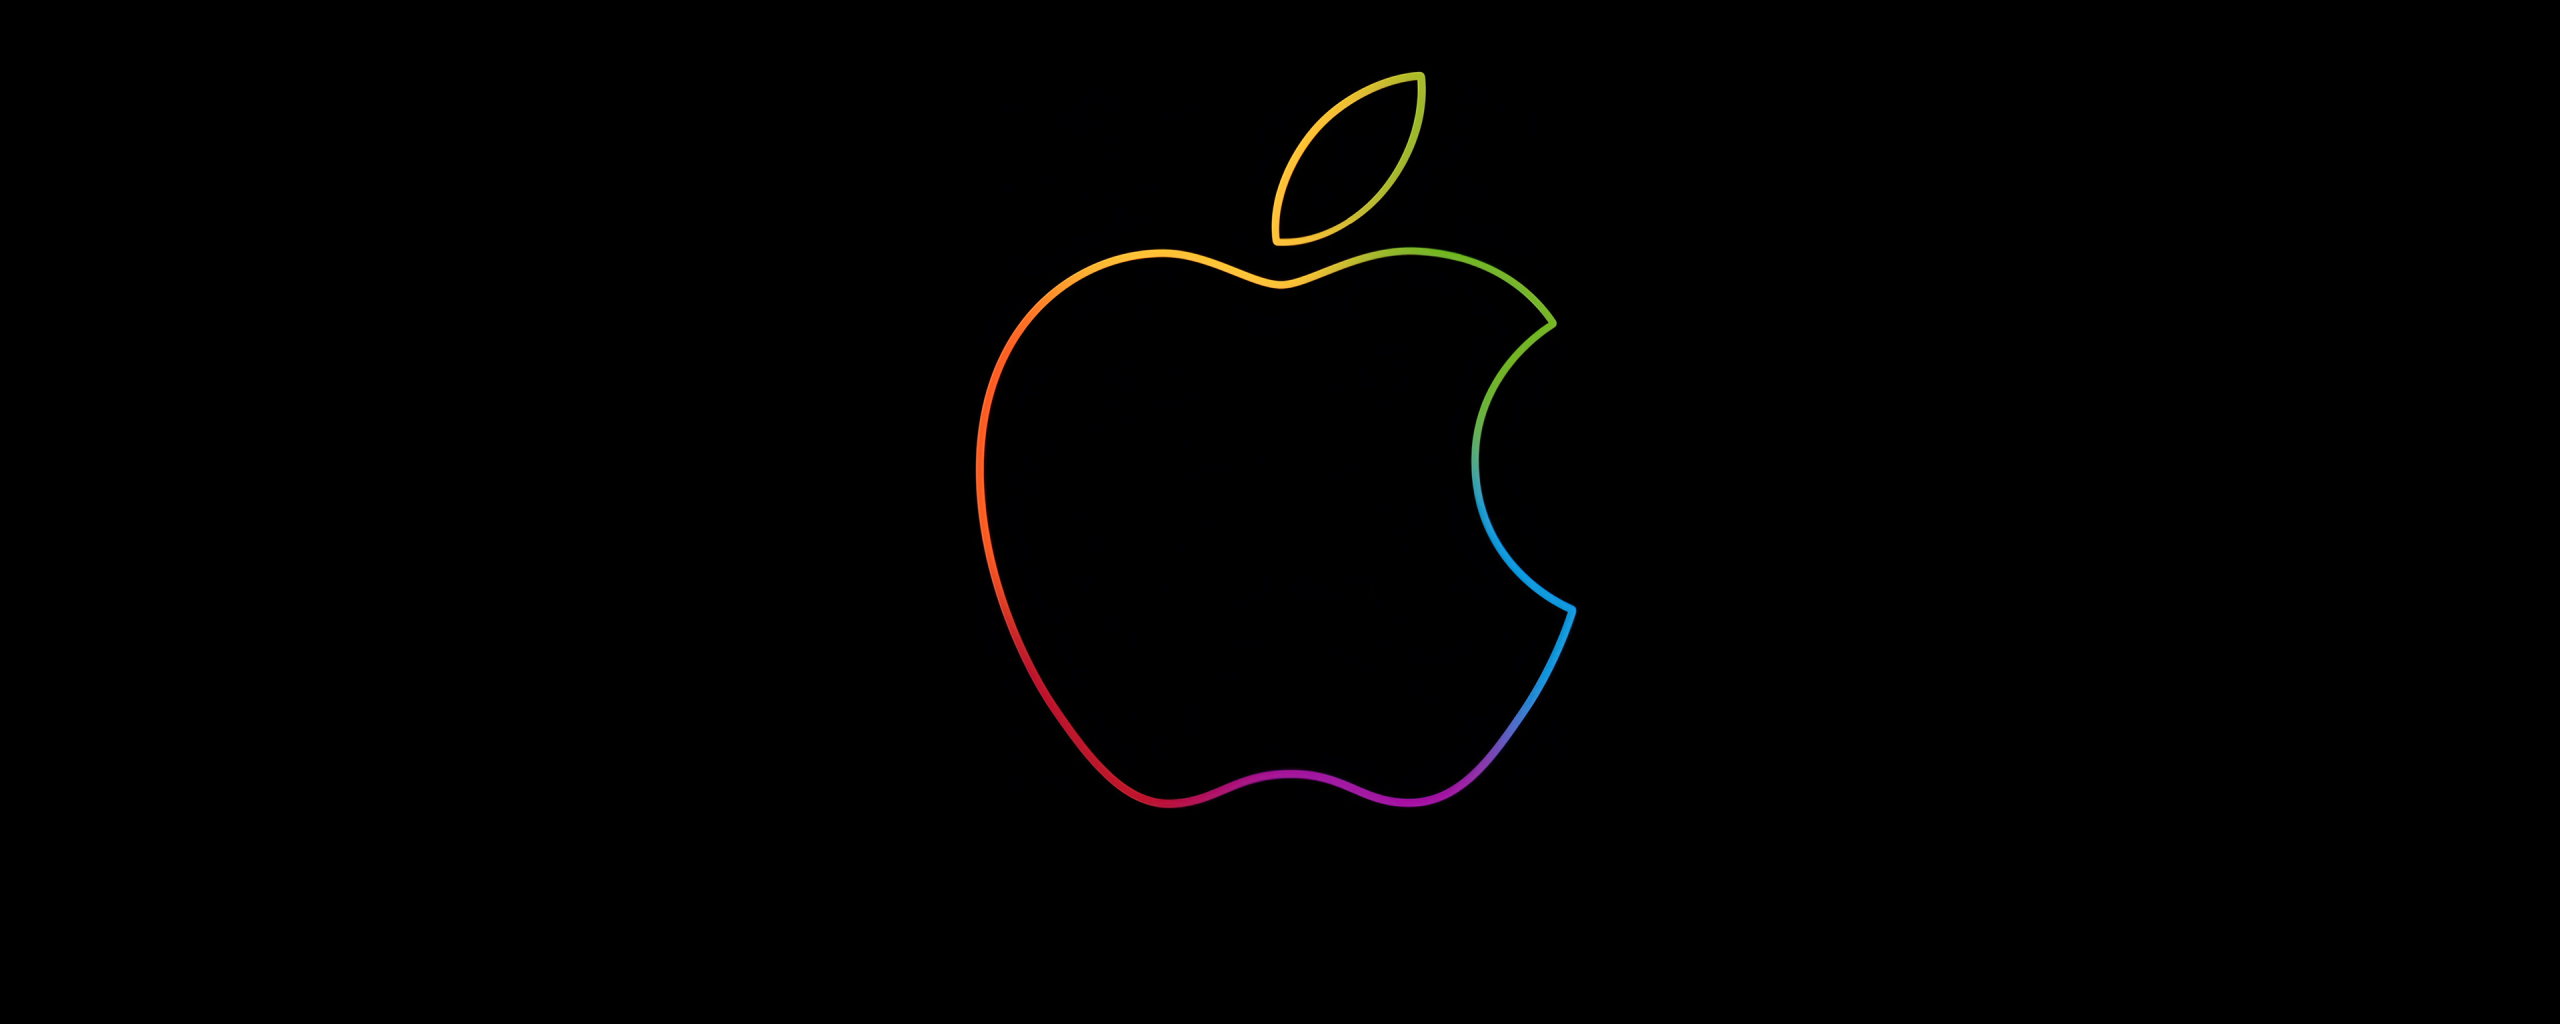 2560x1024 Resolution Apple 4k Neon Logo 2560x1024 Resolution Wallpaper ...